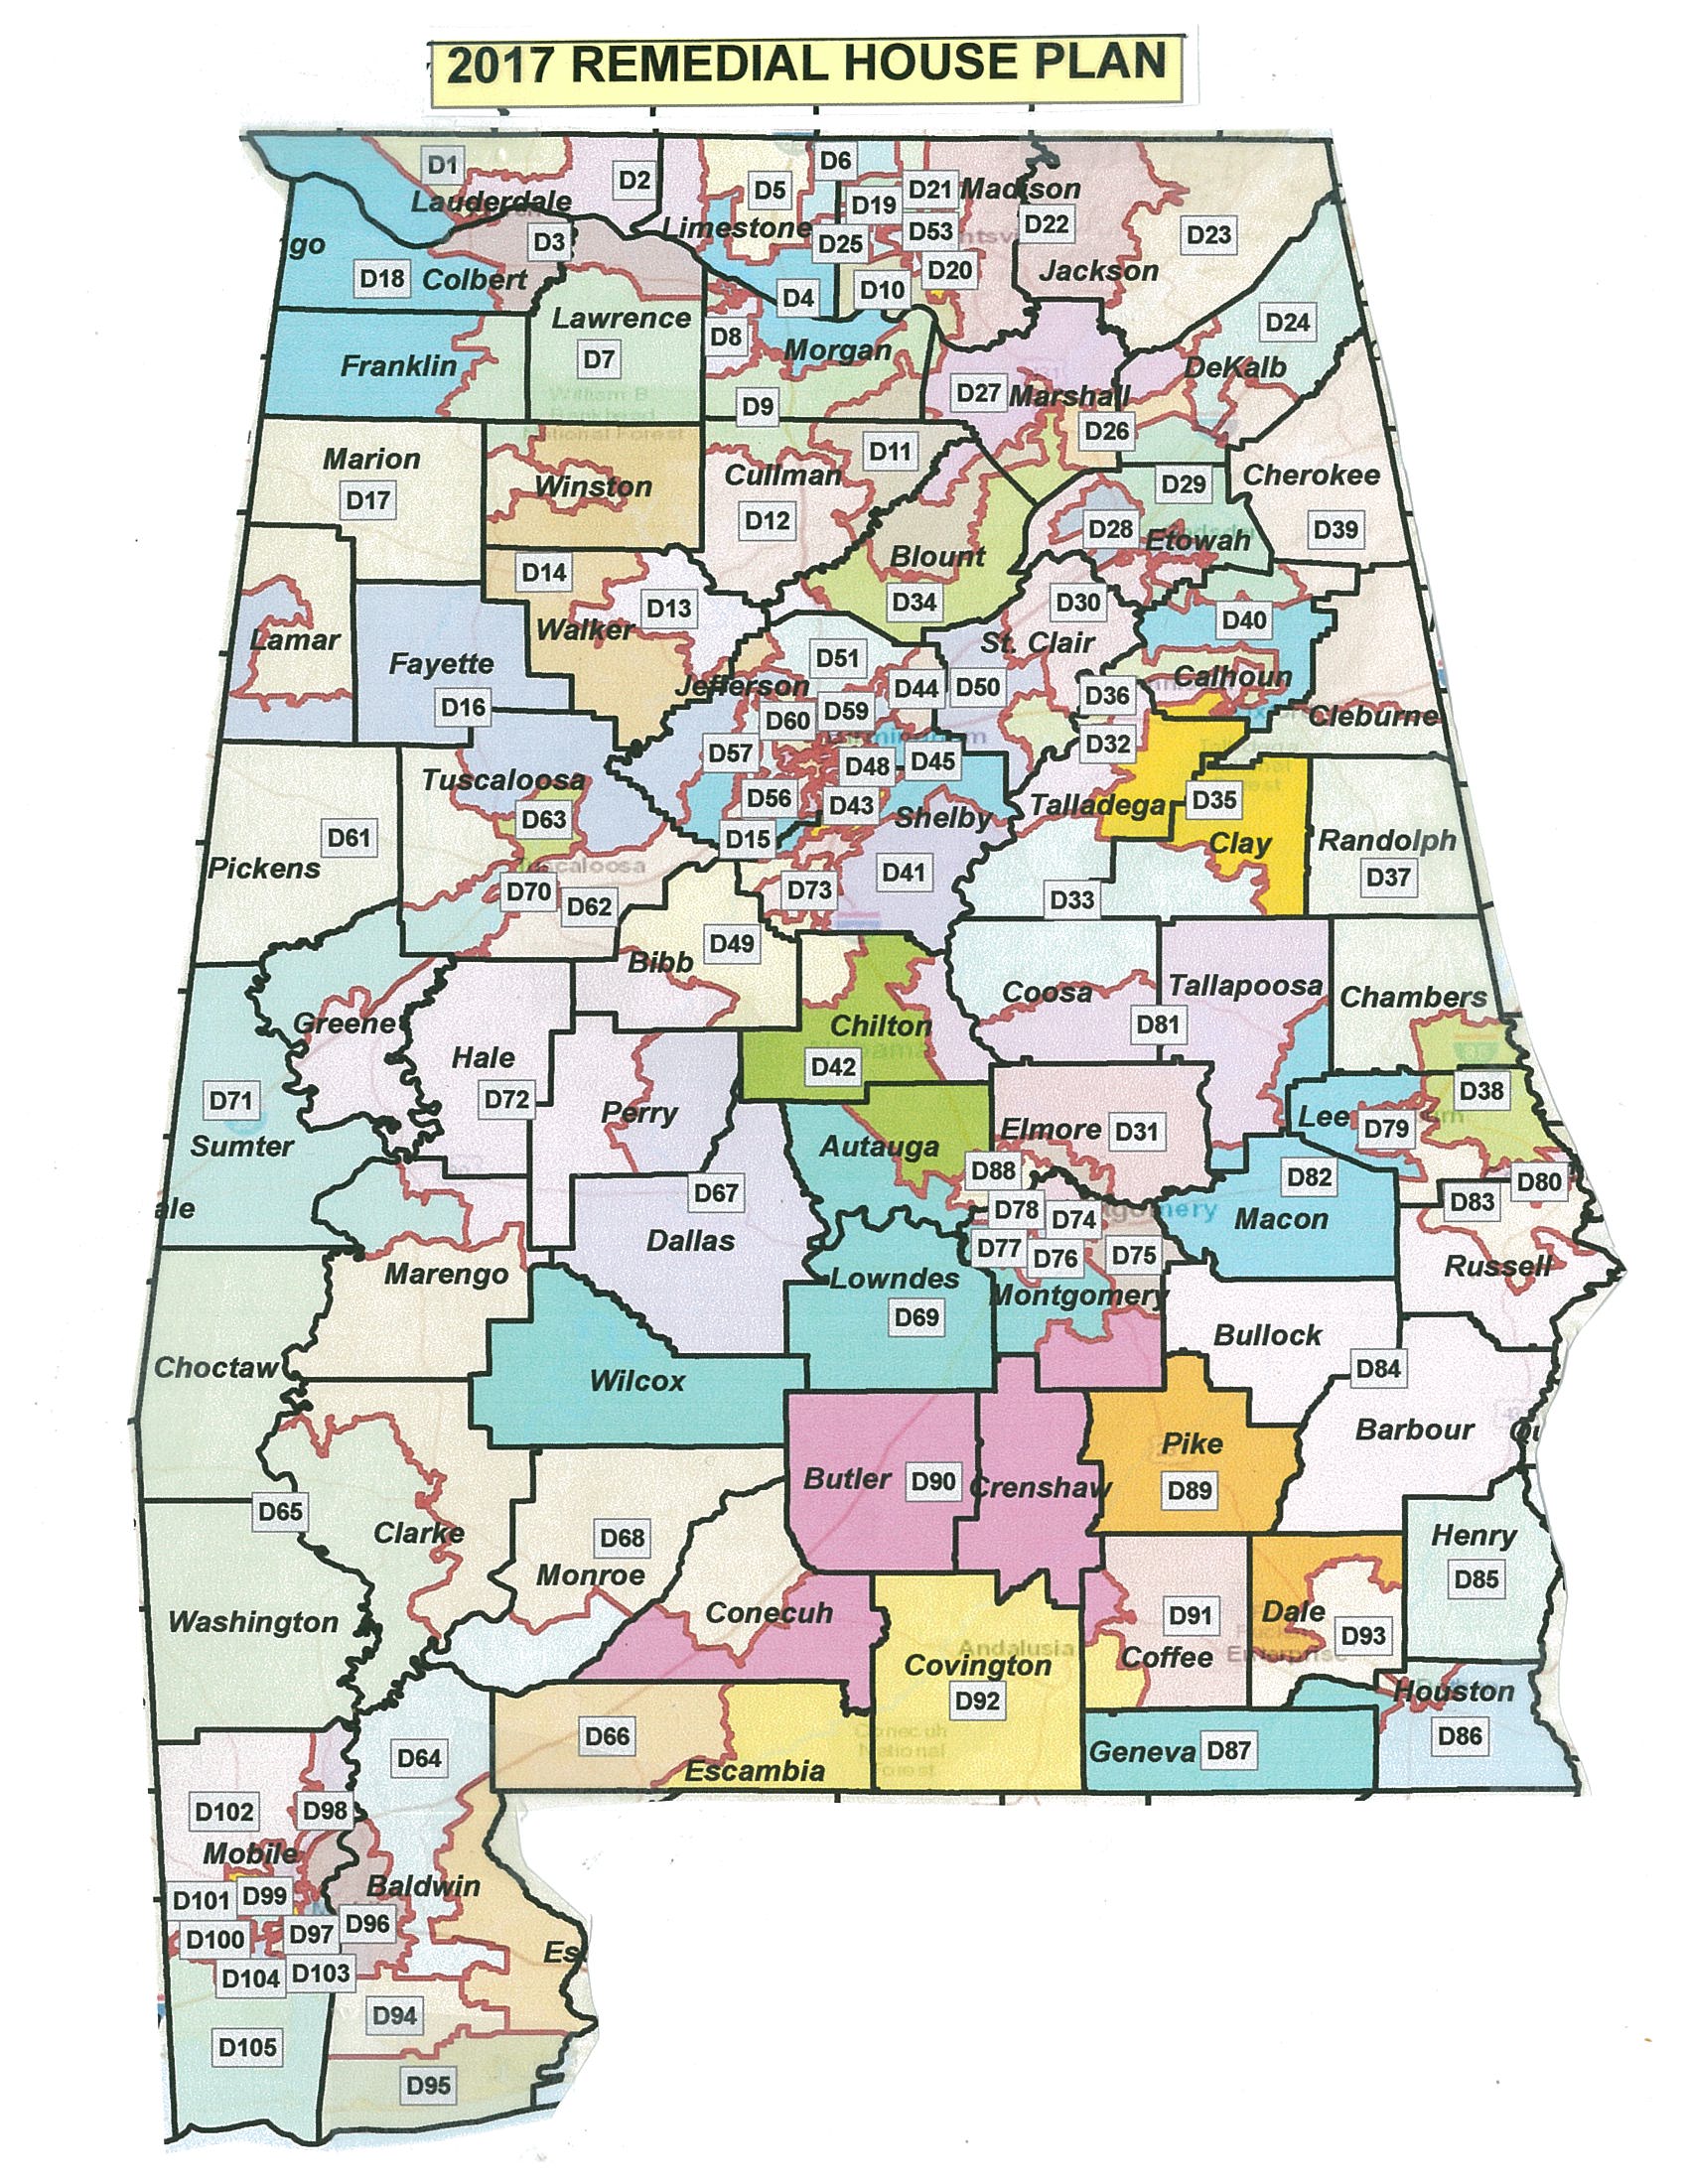 State redistricting information for Alabama